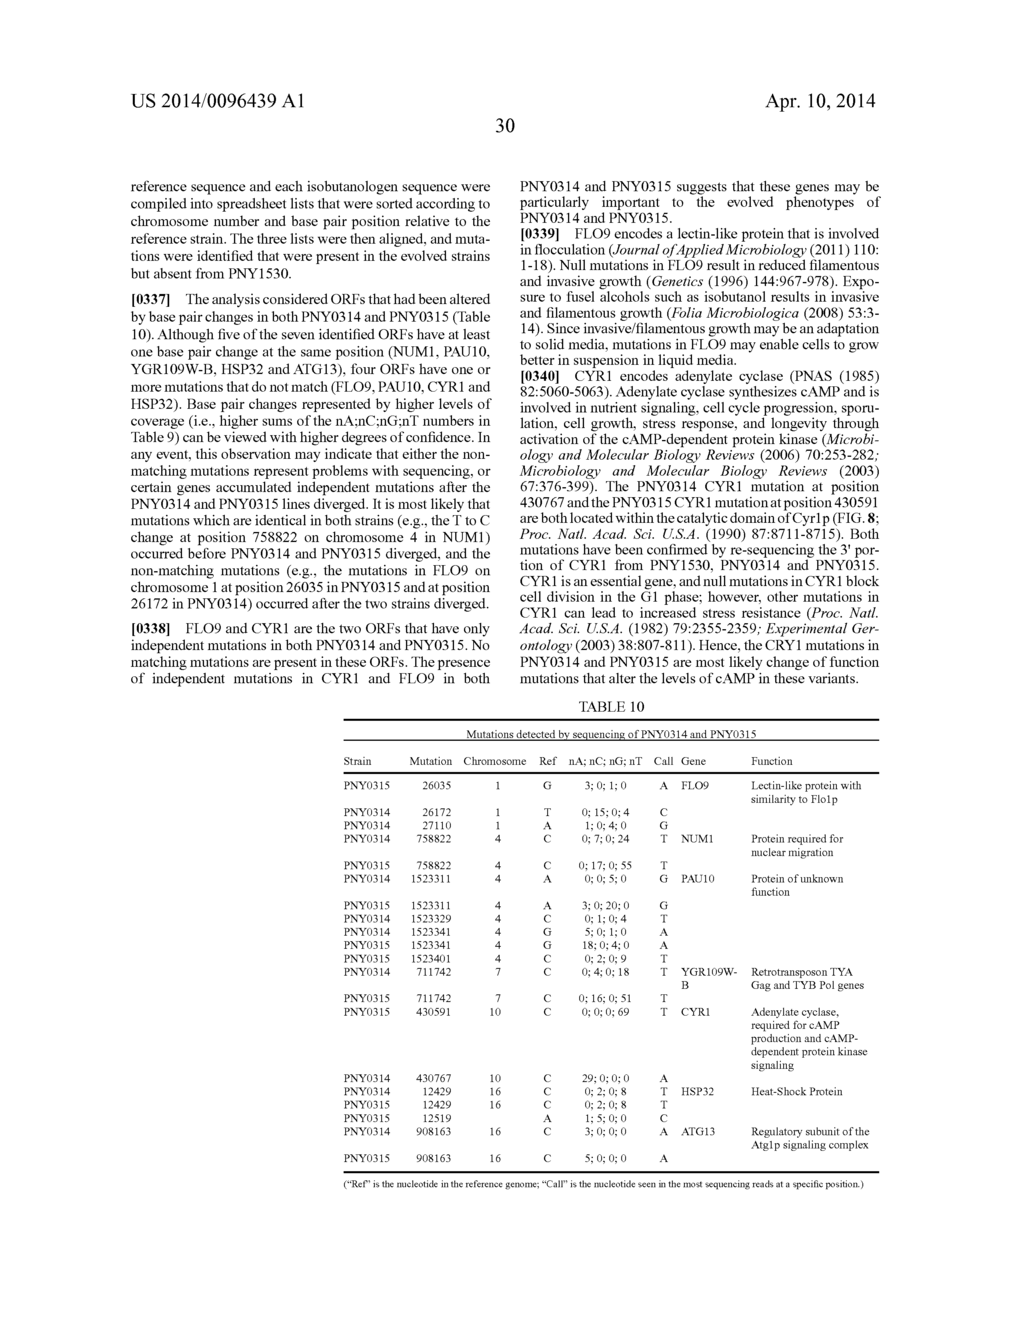 BUTANOL TOLERANCE IN MICROORGANISMS - diagram, schematic, and image 40